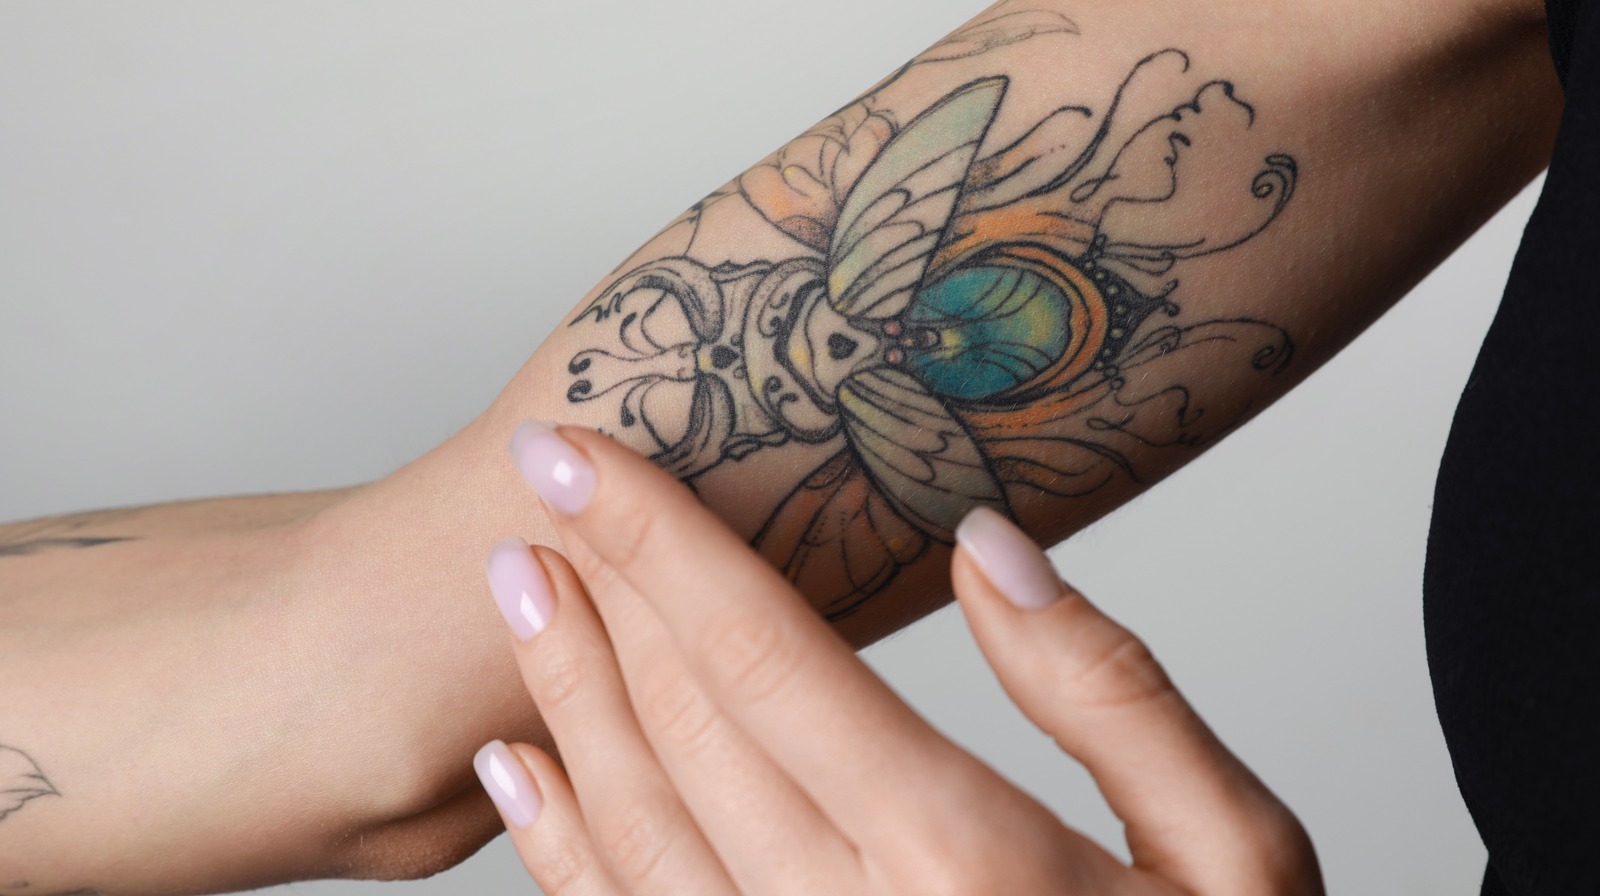 Sentimental Memorial Tattoos Have Mental Health Benefits, Too